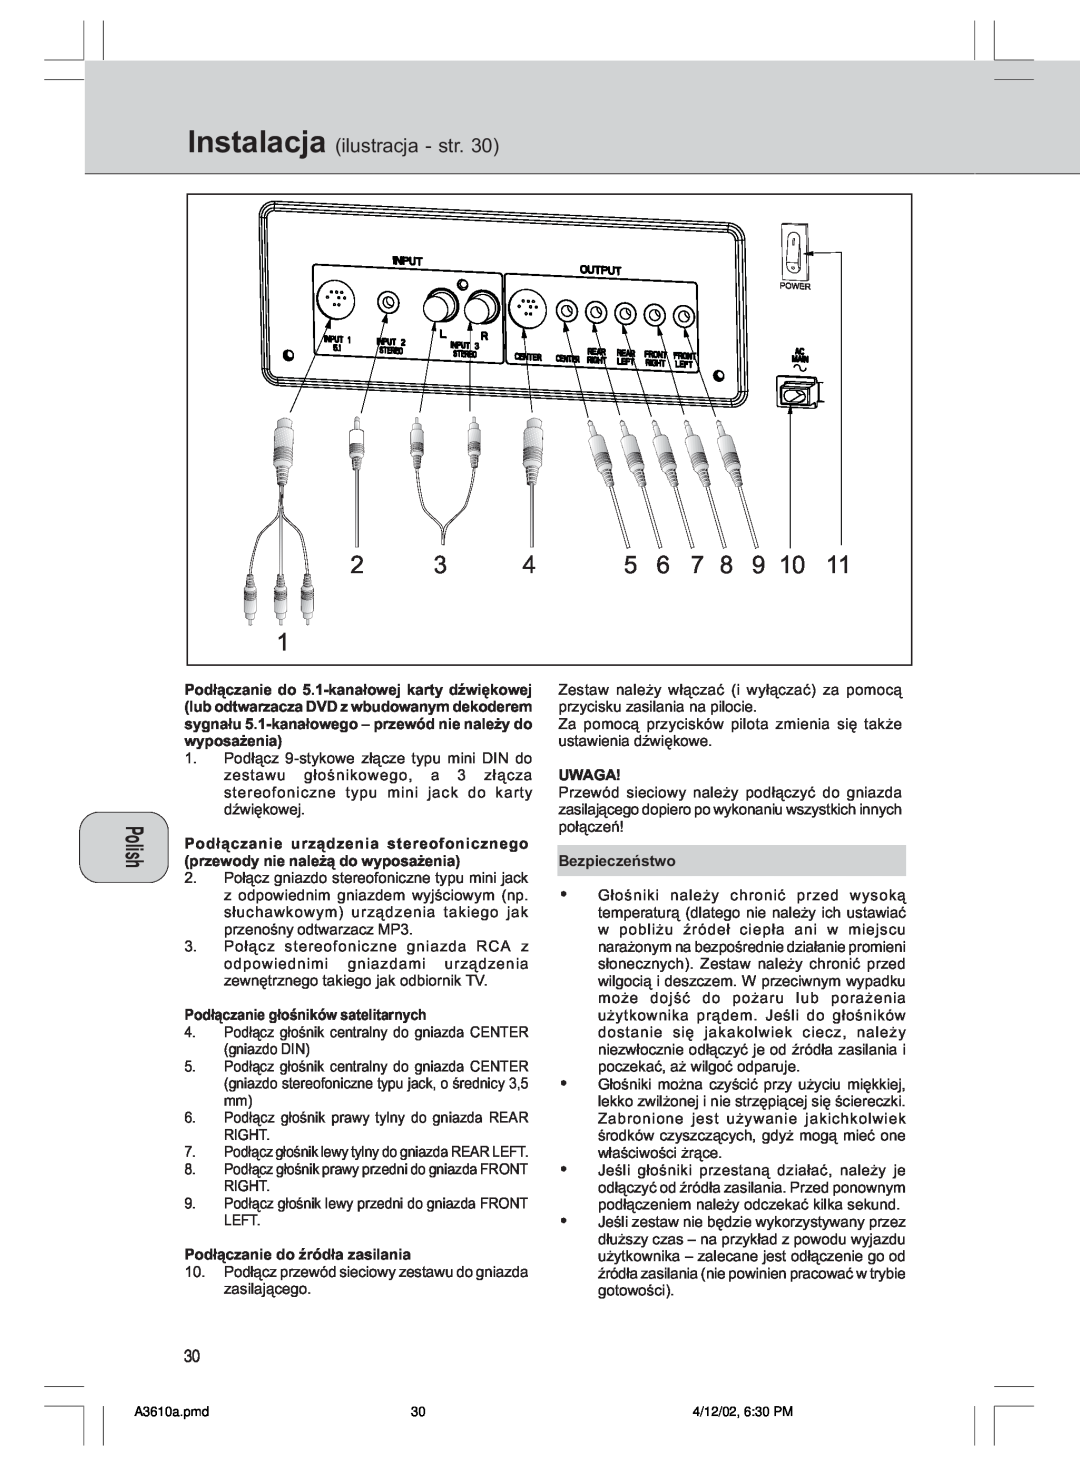 Philips A3.610, MMS316 manual 5 6, Instalacja ilustracja - str 